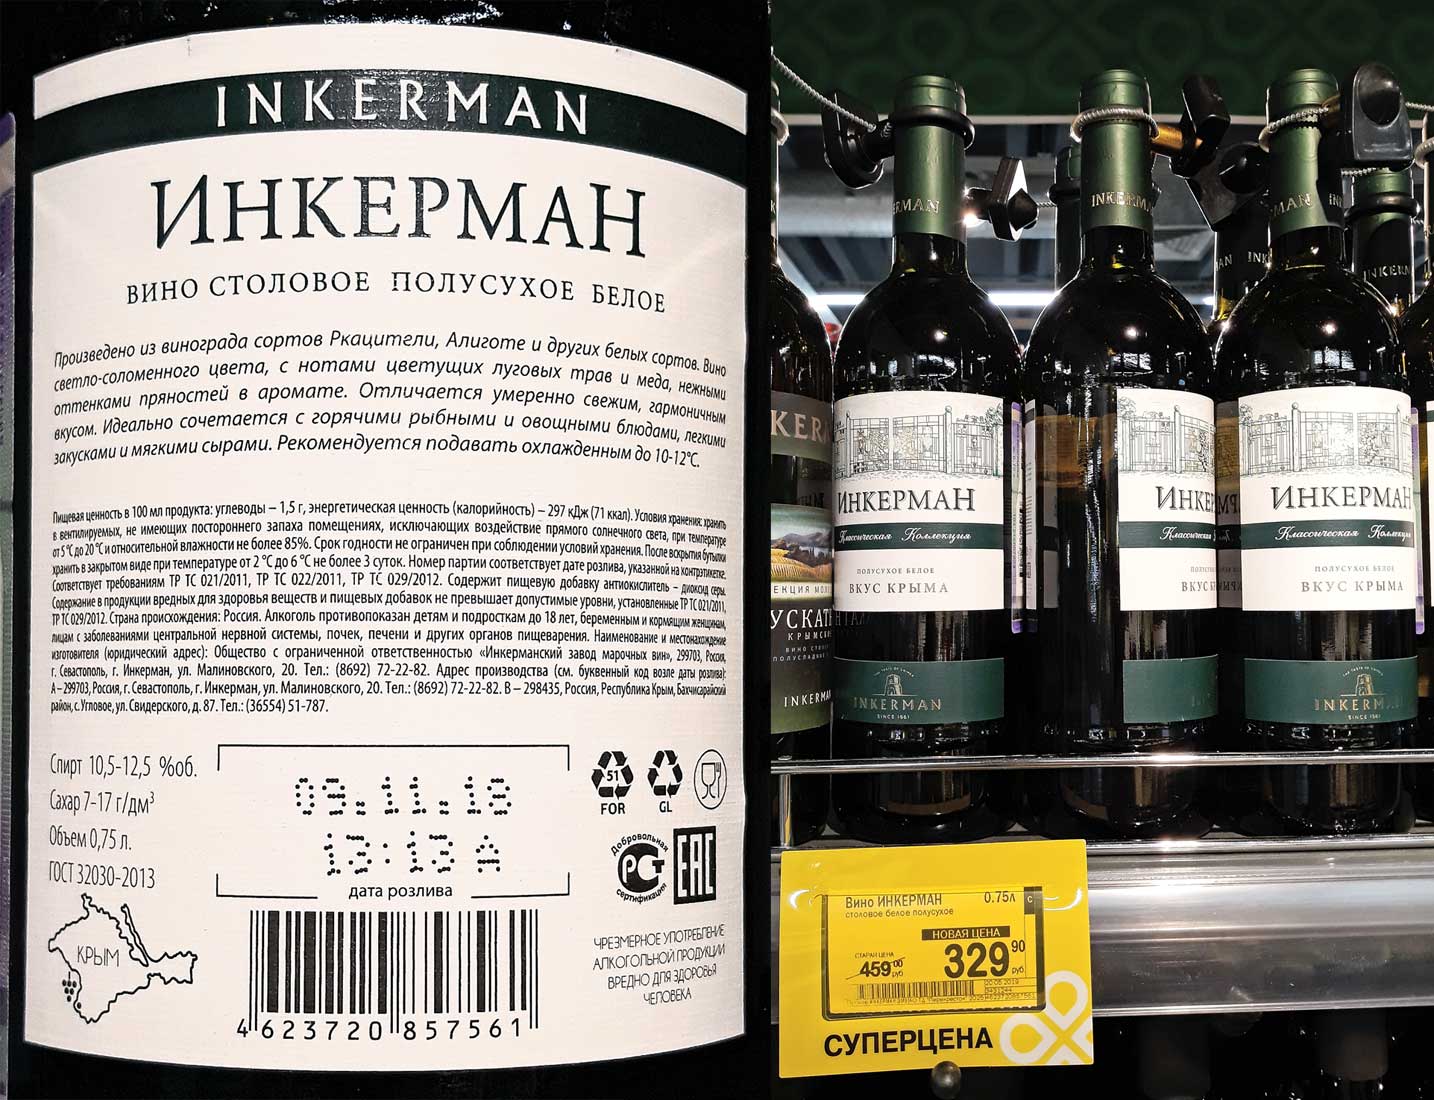 Инкерман красное полусухое. Вино Инкерман полусухое белое перекрёсток. Крымское белое вино Инкерман. Вино Инкерман, белое полусухое. Инкерман вино ручной сбор белое полусухое.